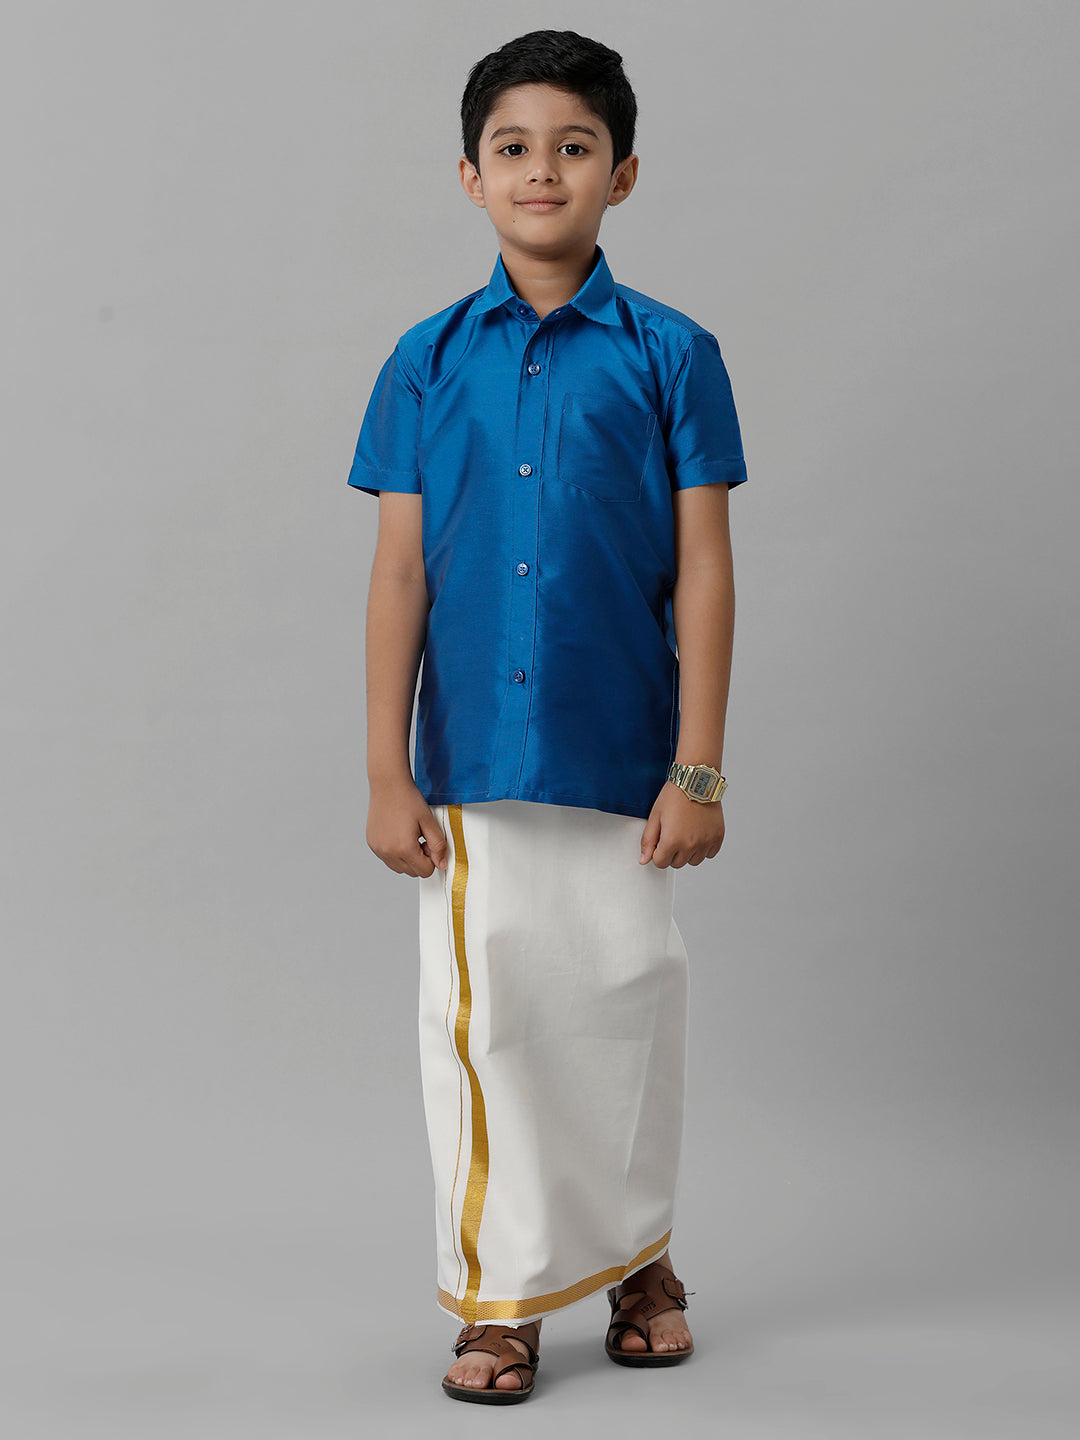 Buy Boys Silk Cotton Dhoti Set, Kids Royal Blue Shirt